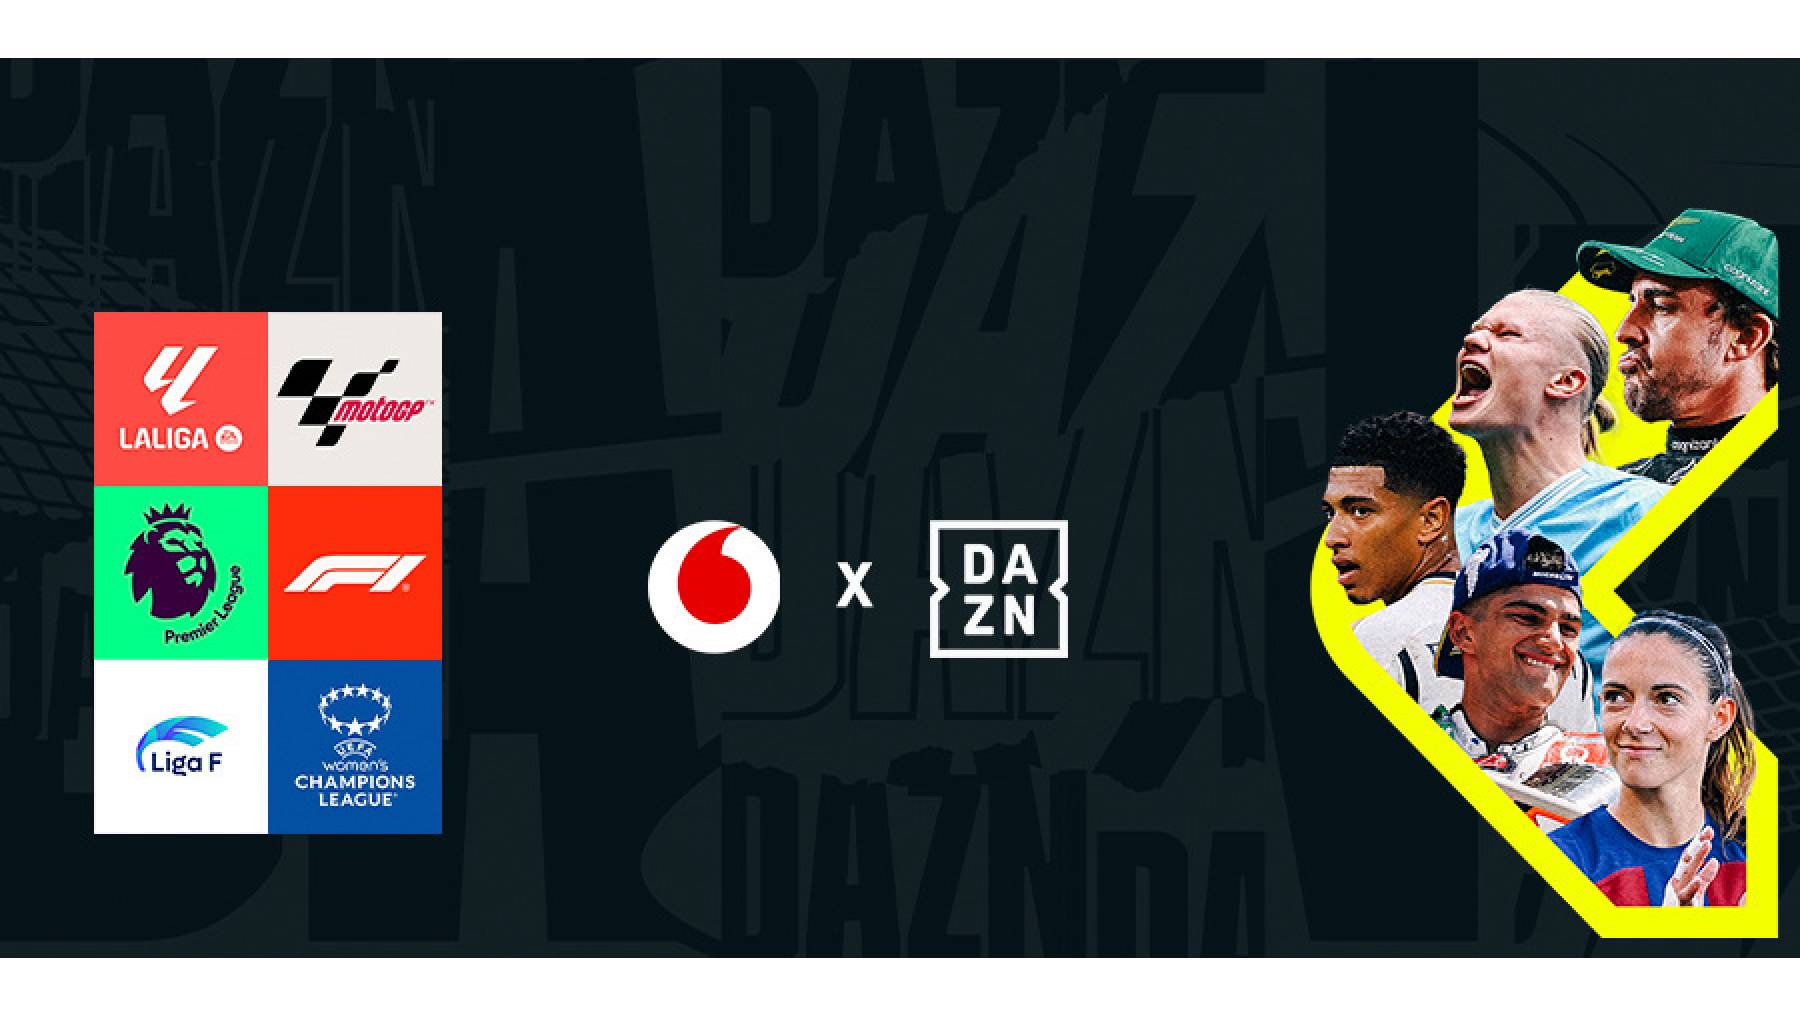 Vodafone firma un acuerdo con Dazn.